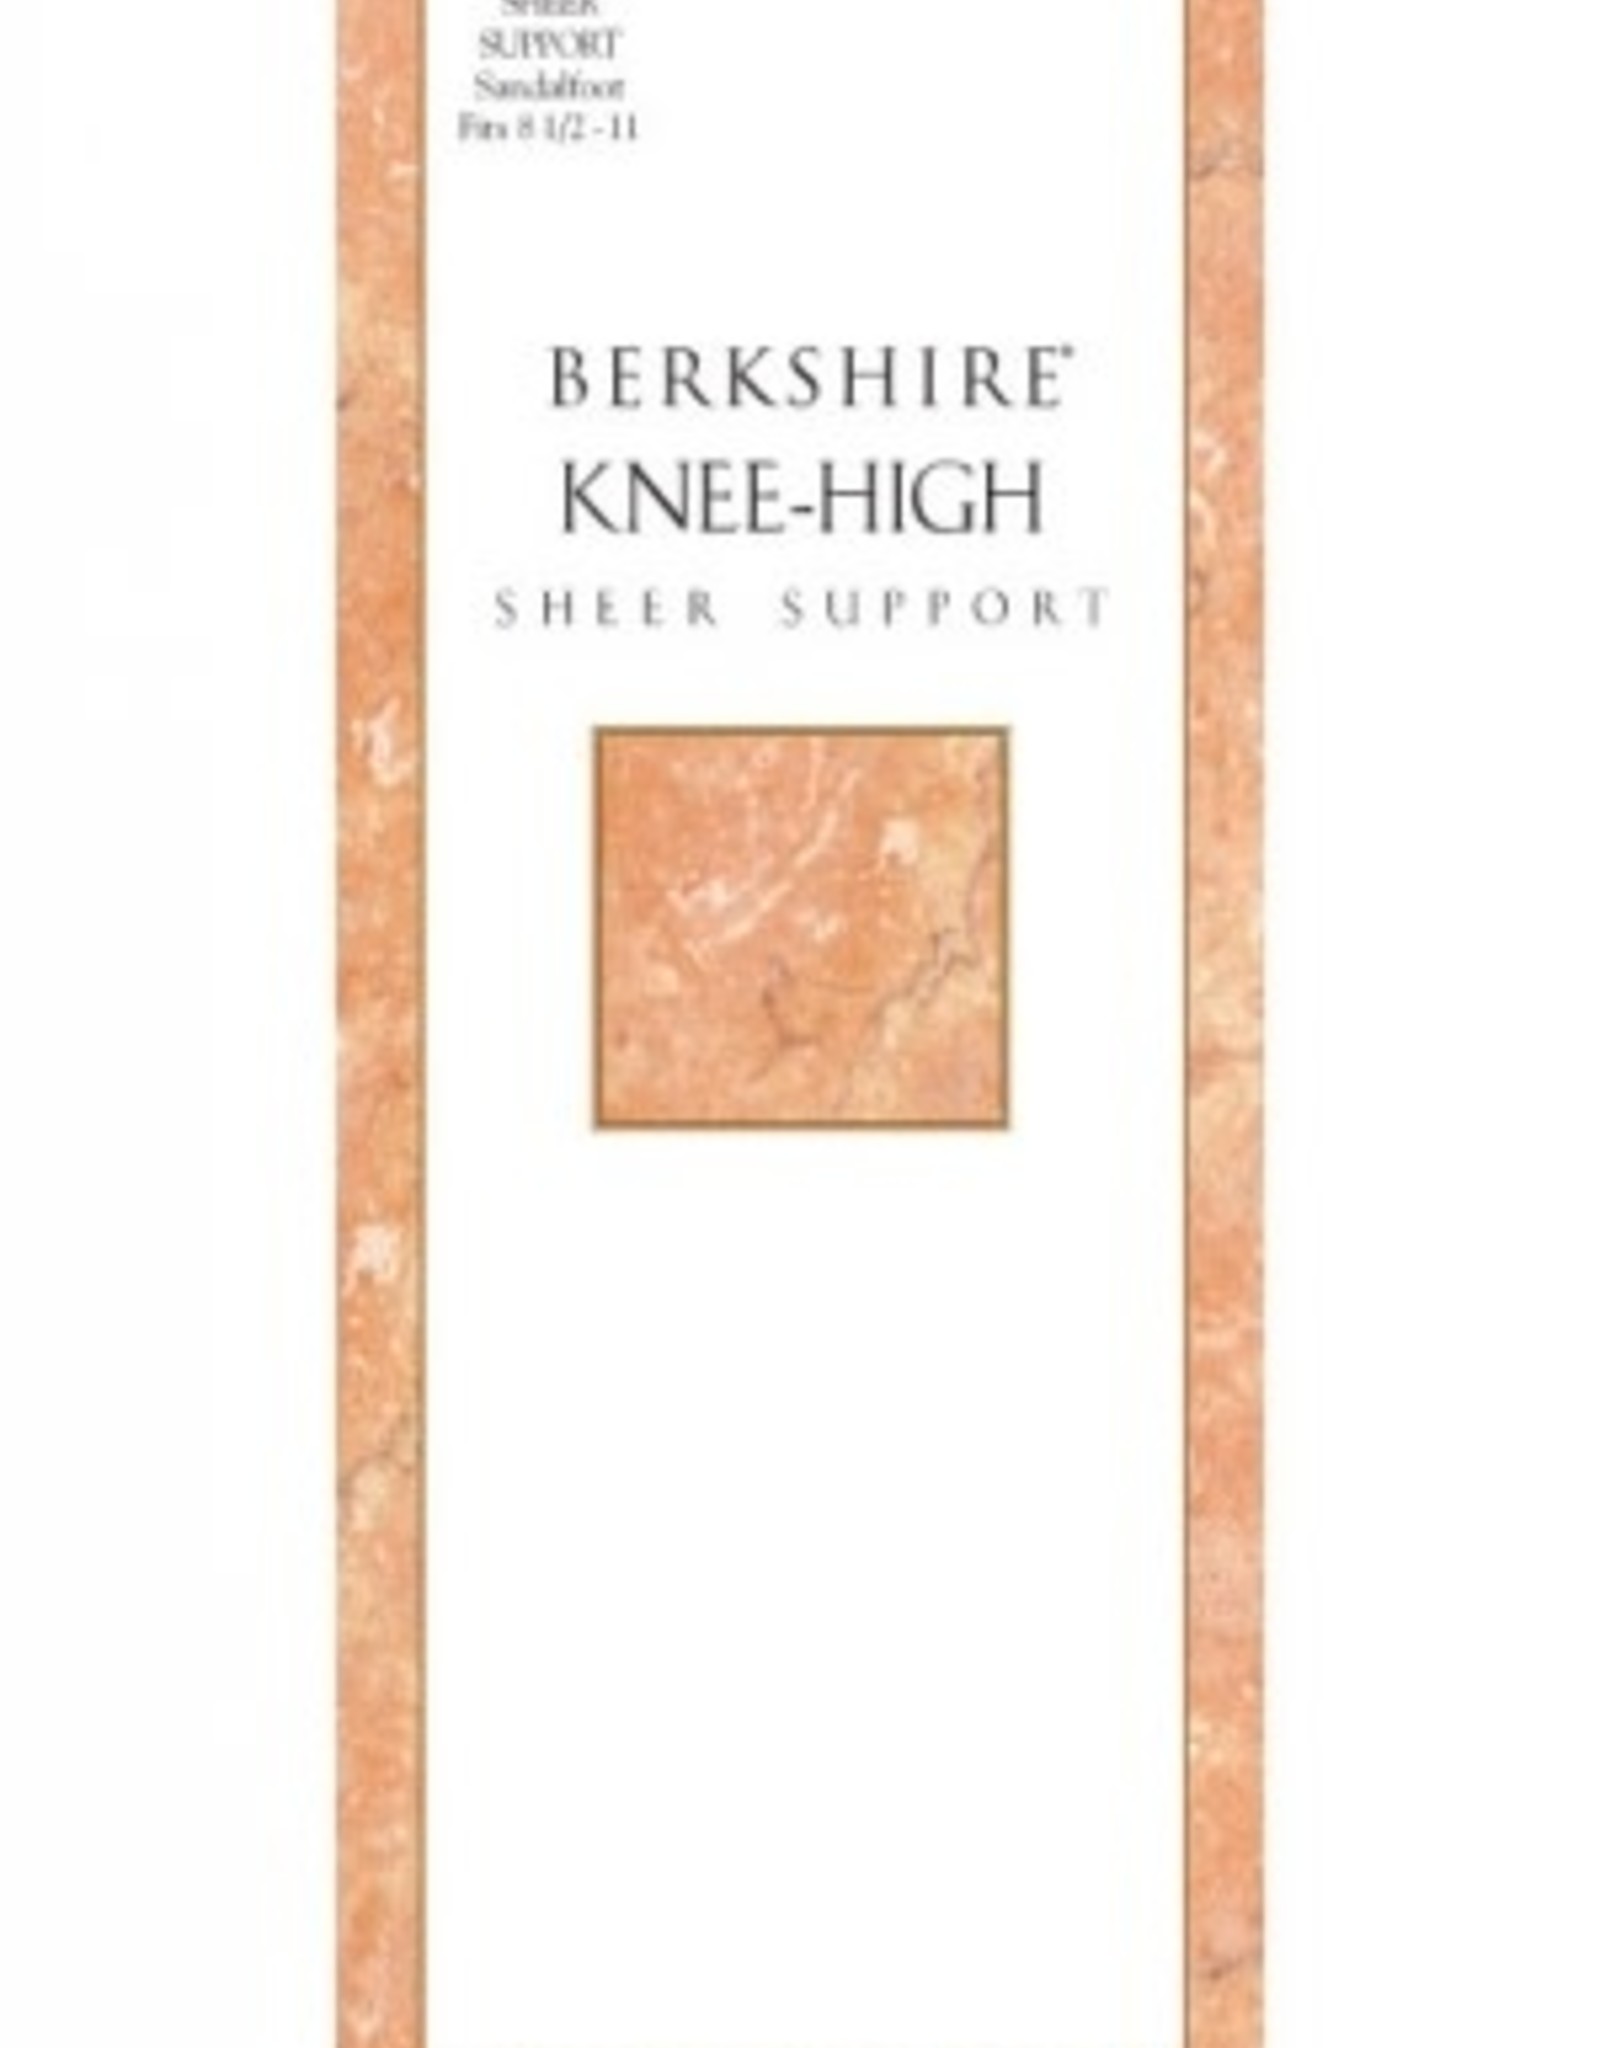 Berkshire Berkshire knee High 40 Denier